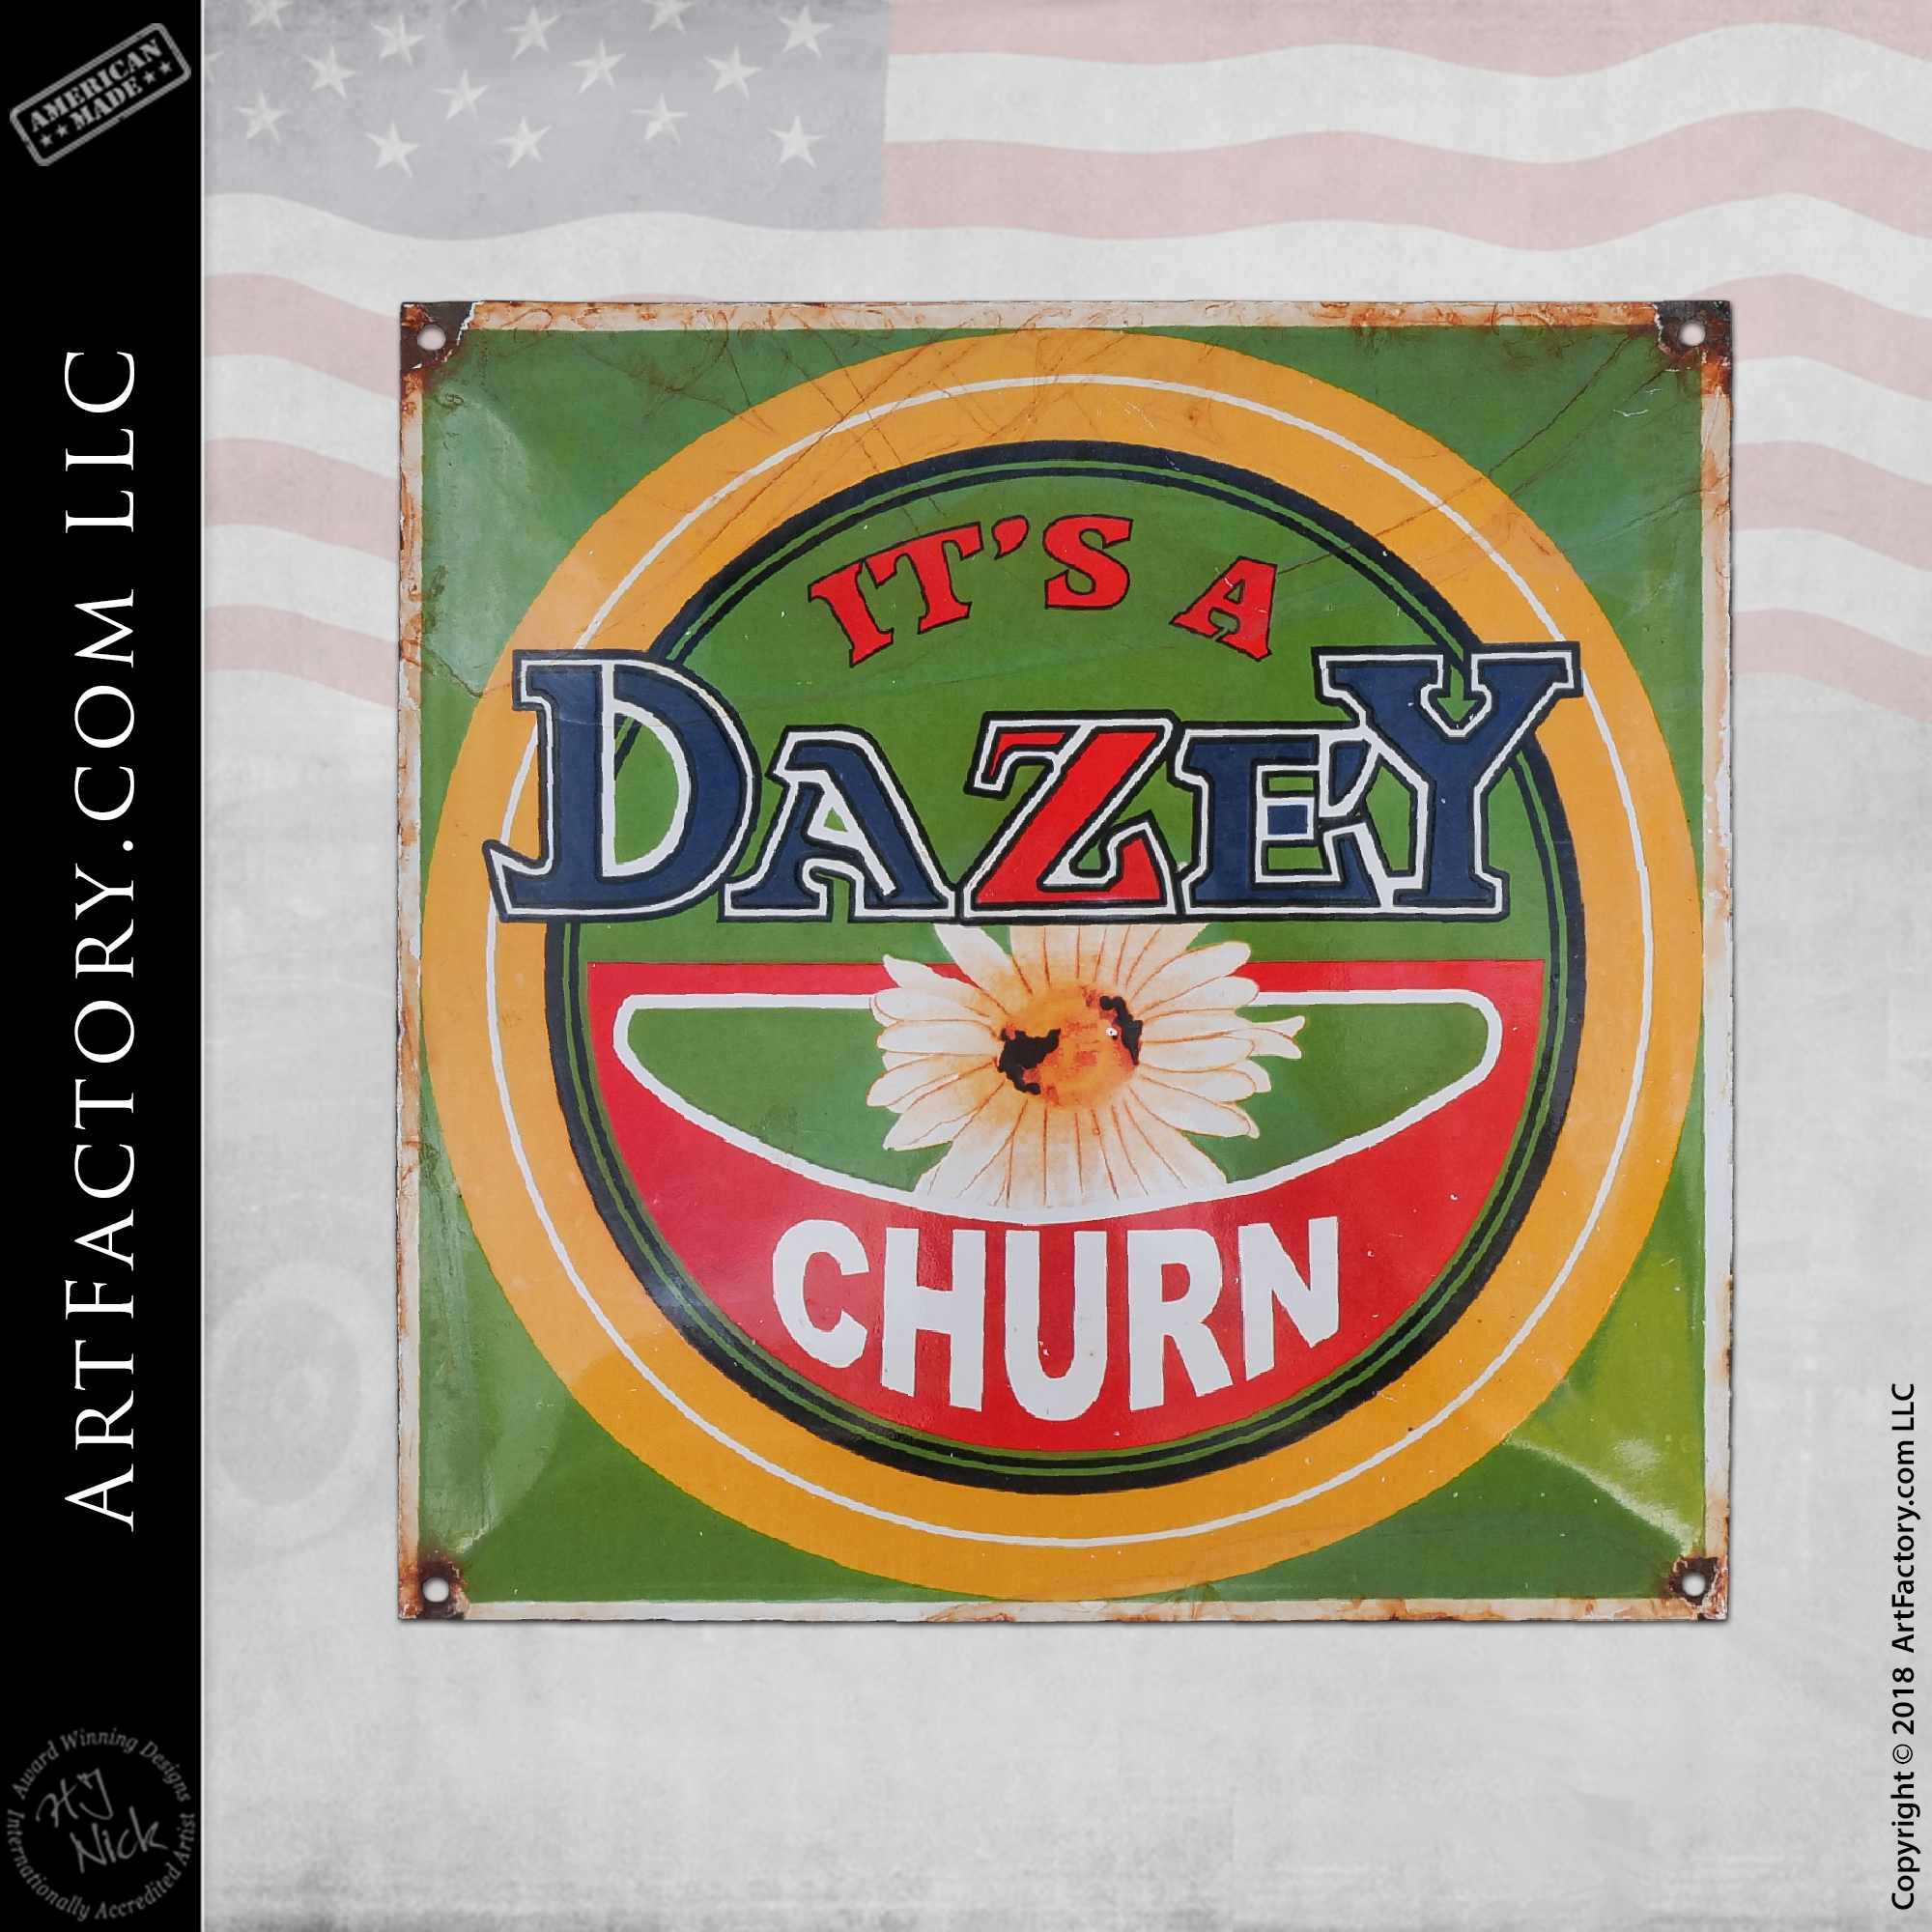 Dazey Churn Sign